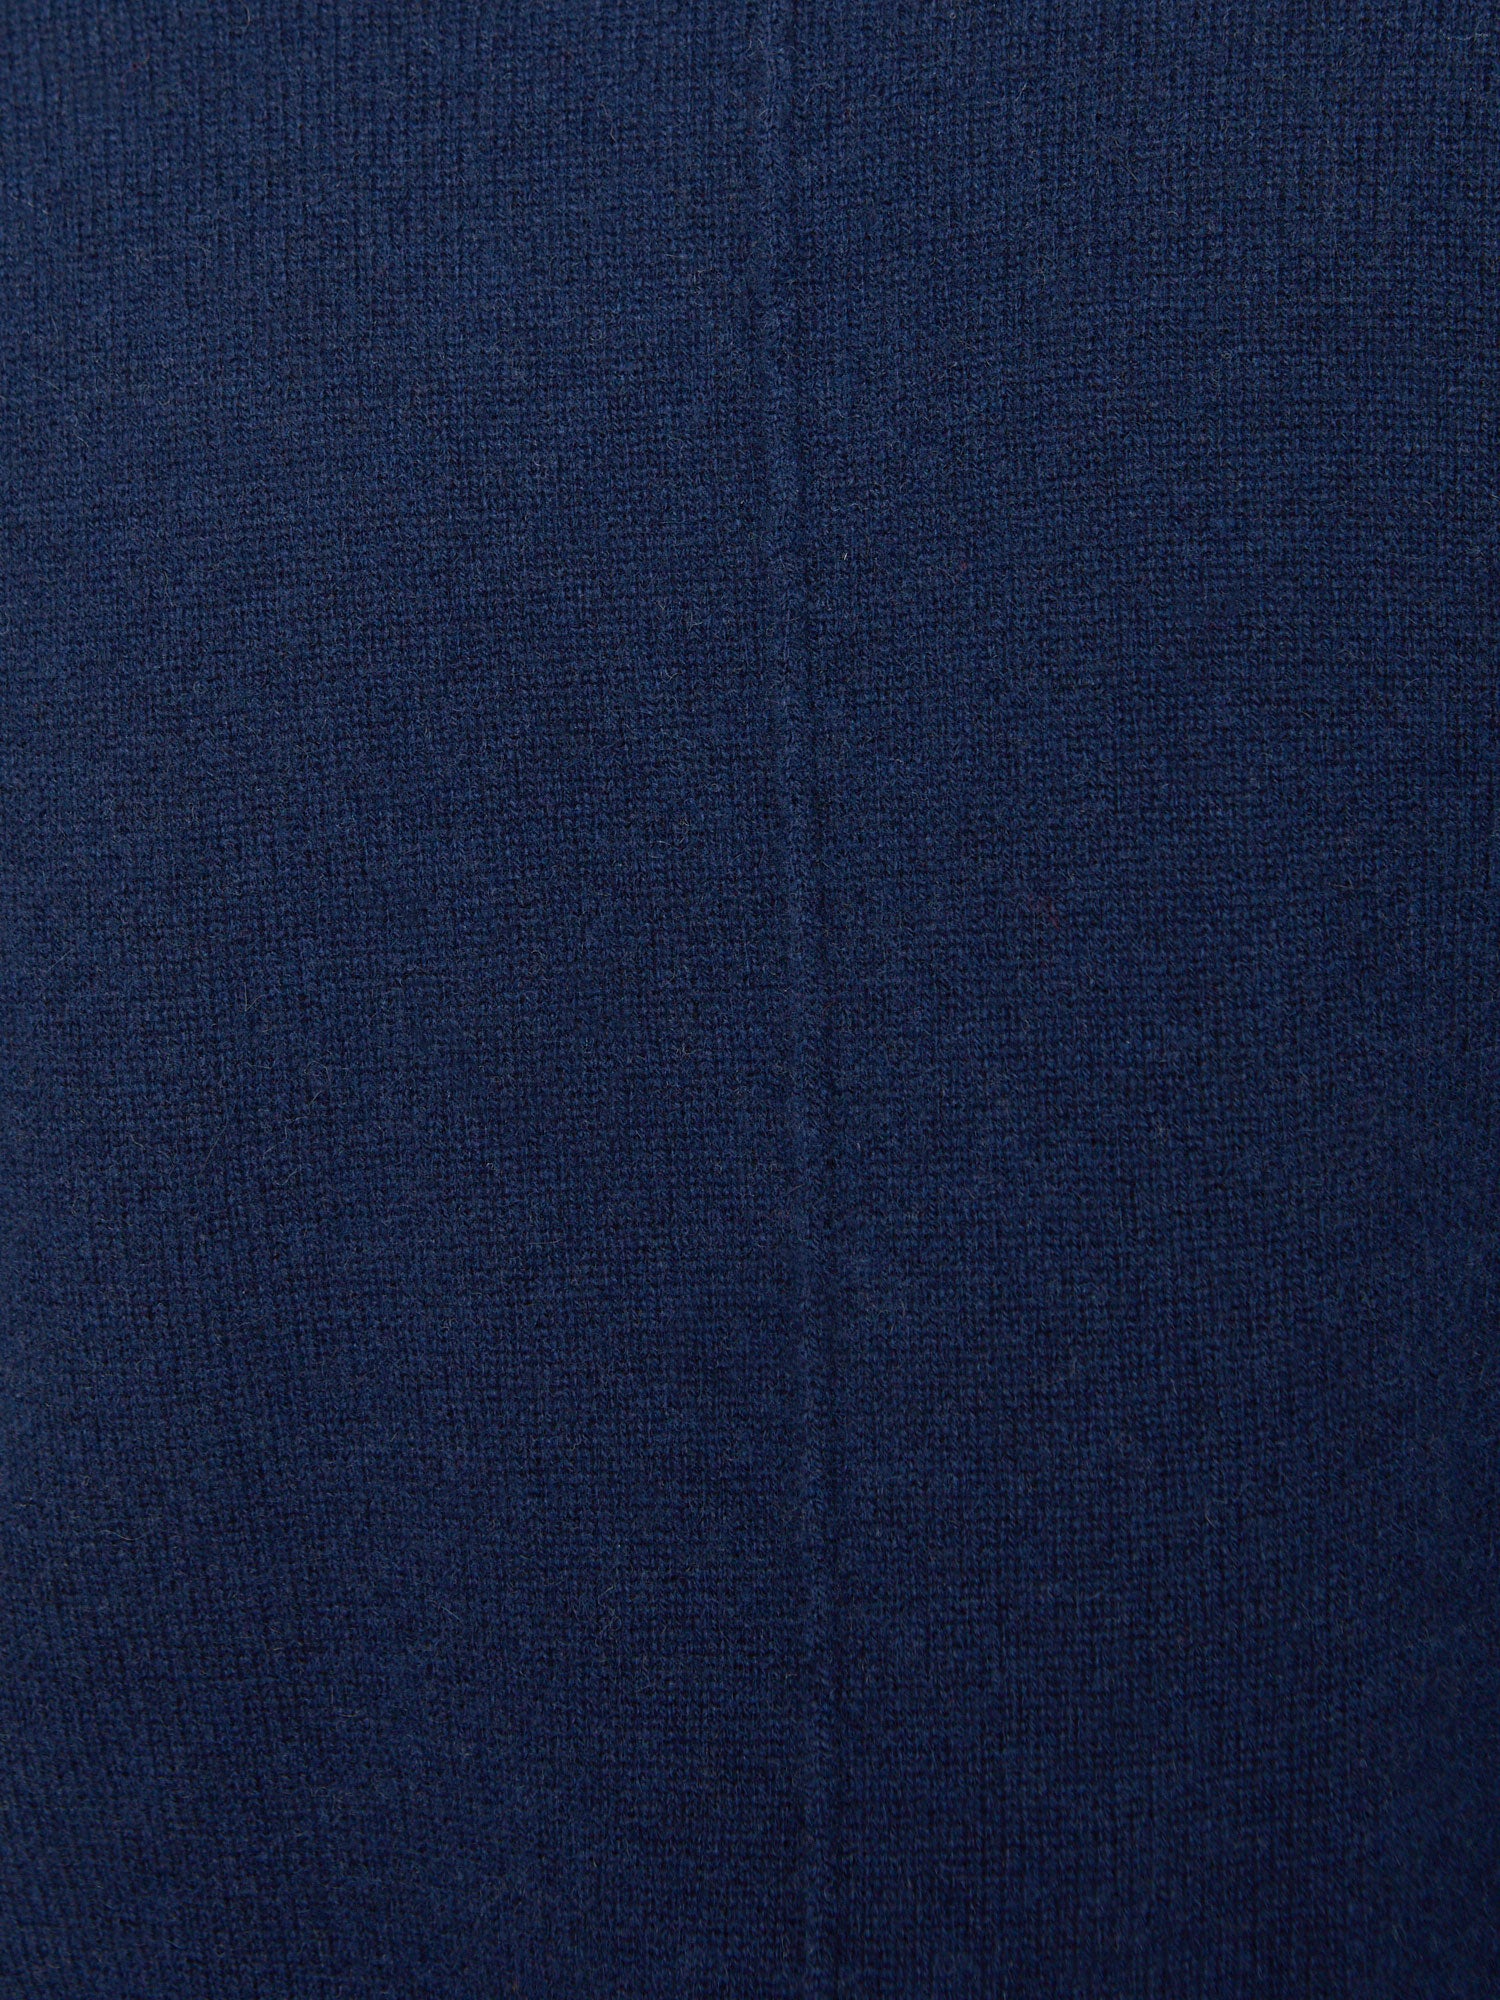 Phinneas cashmere v-neck navy wrap sweater close up